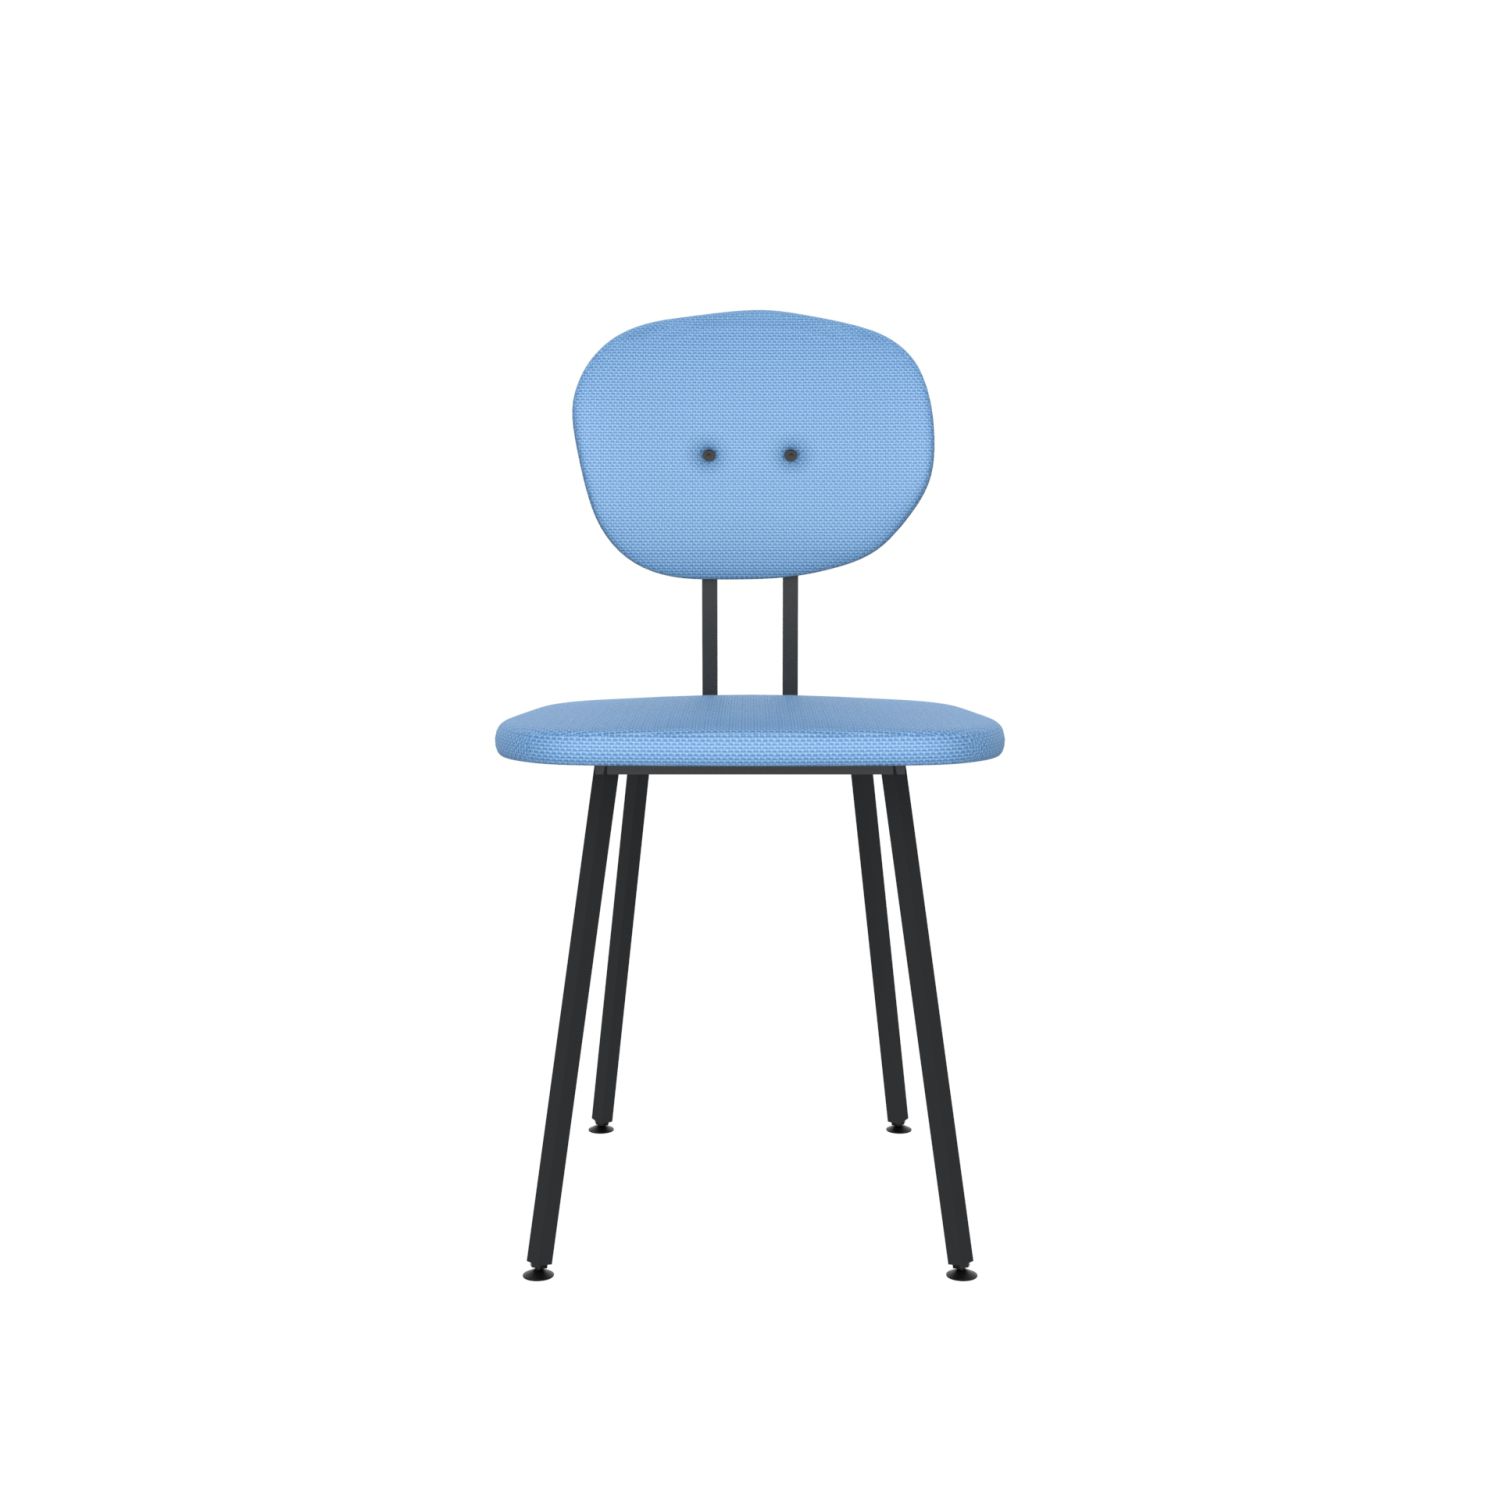 lensvelt maarten baas chair 101 not stackable without armrests backrest a blue horizon 040 black ral9005 hard leg ends